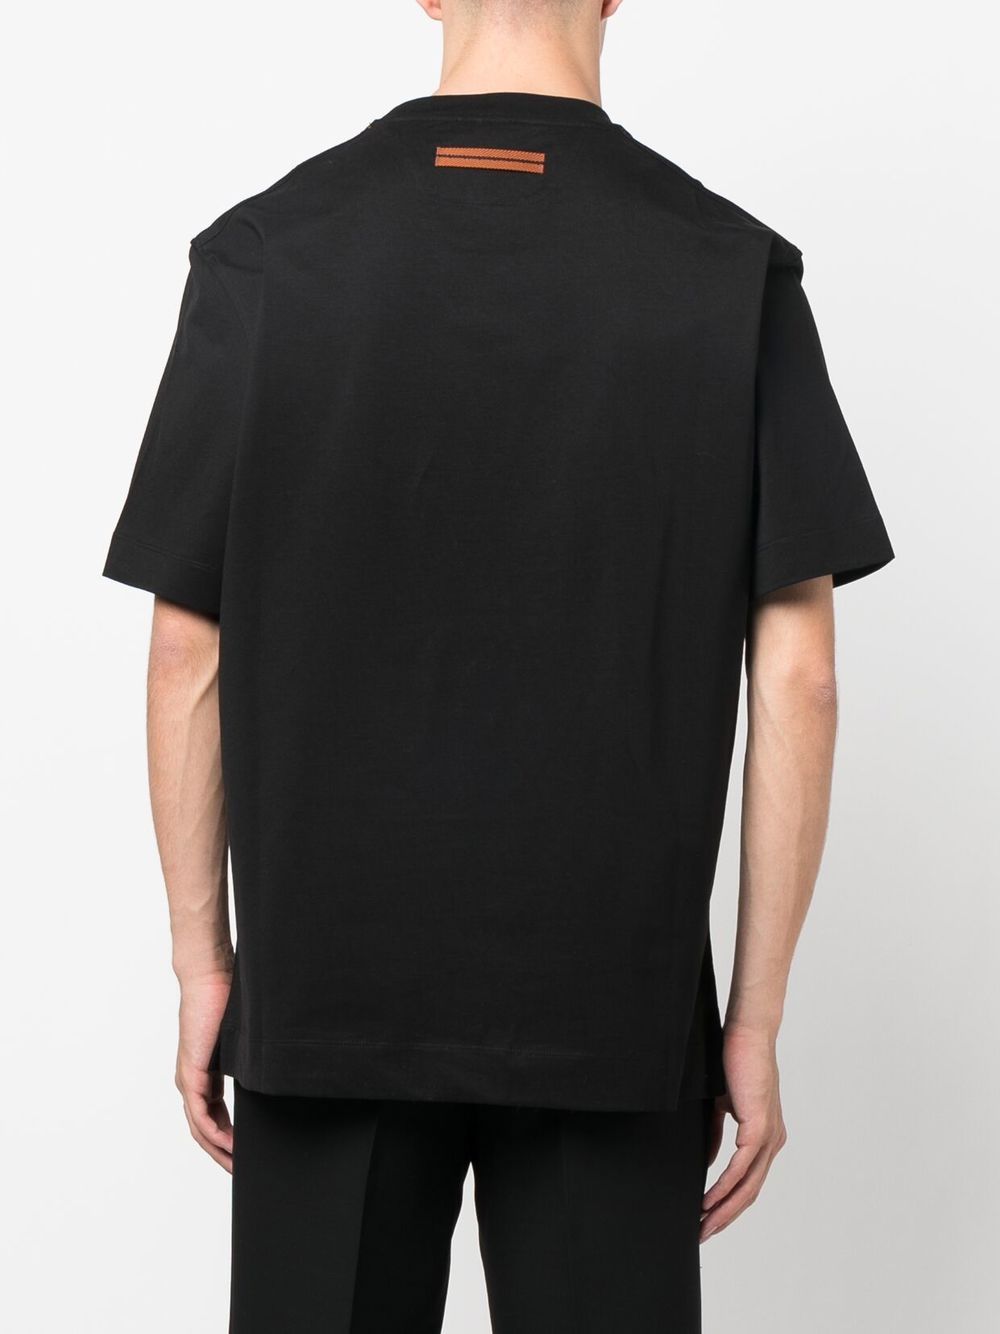 T-shirt nera in cotone con stampa logo